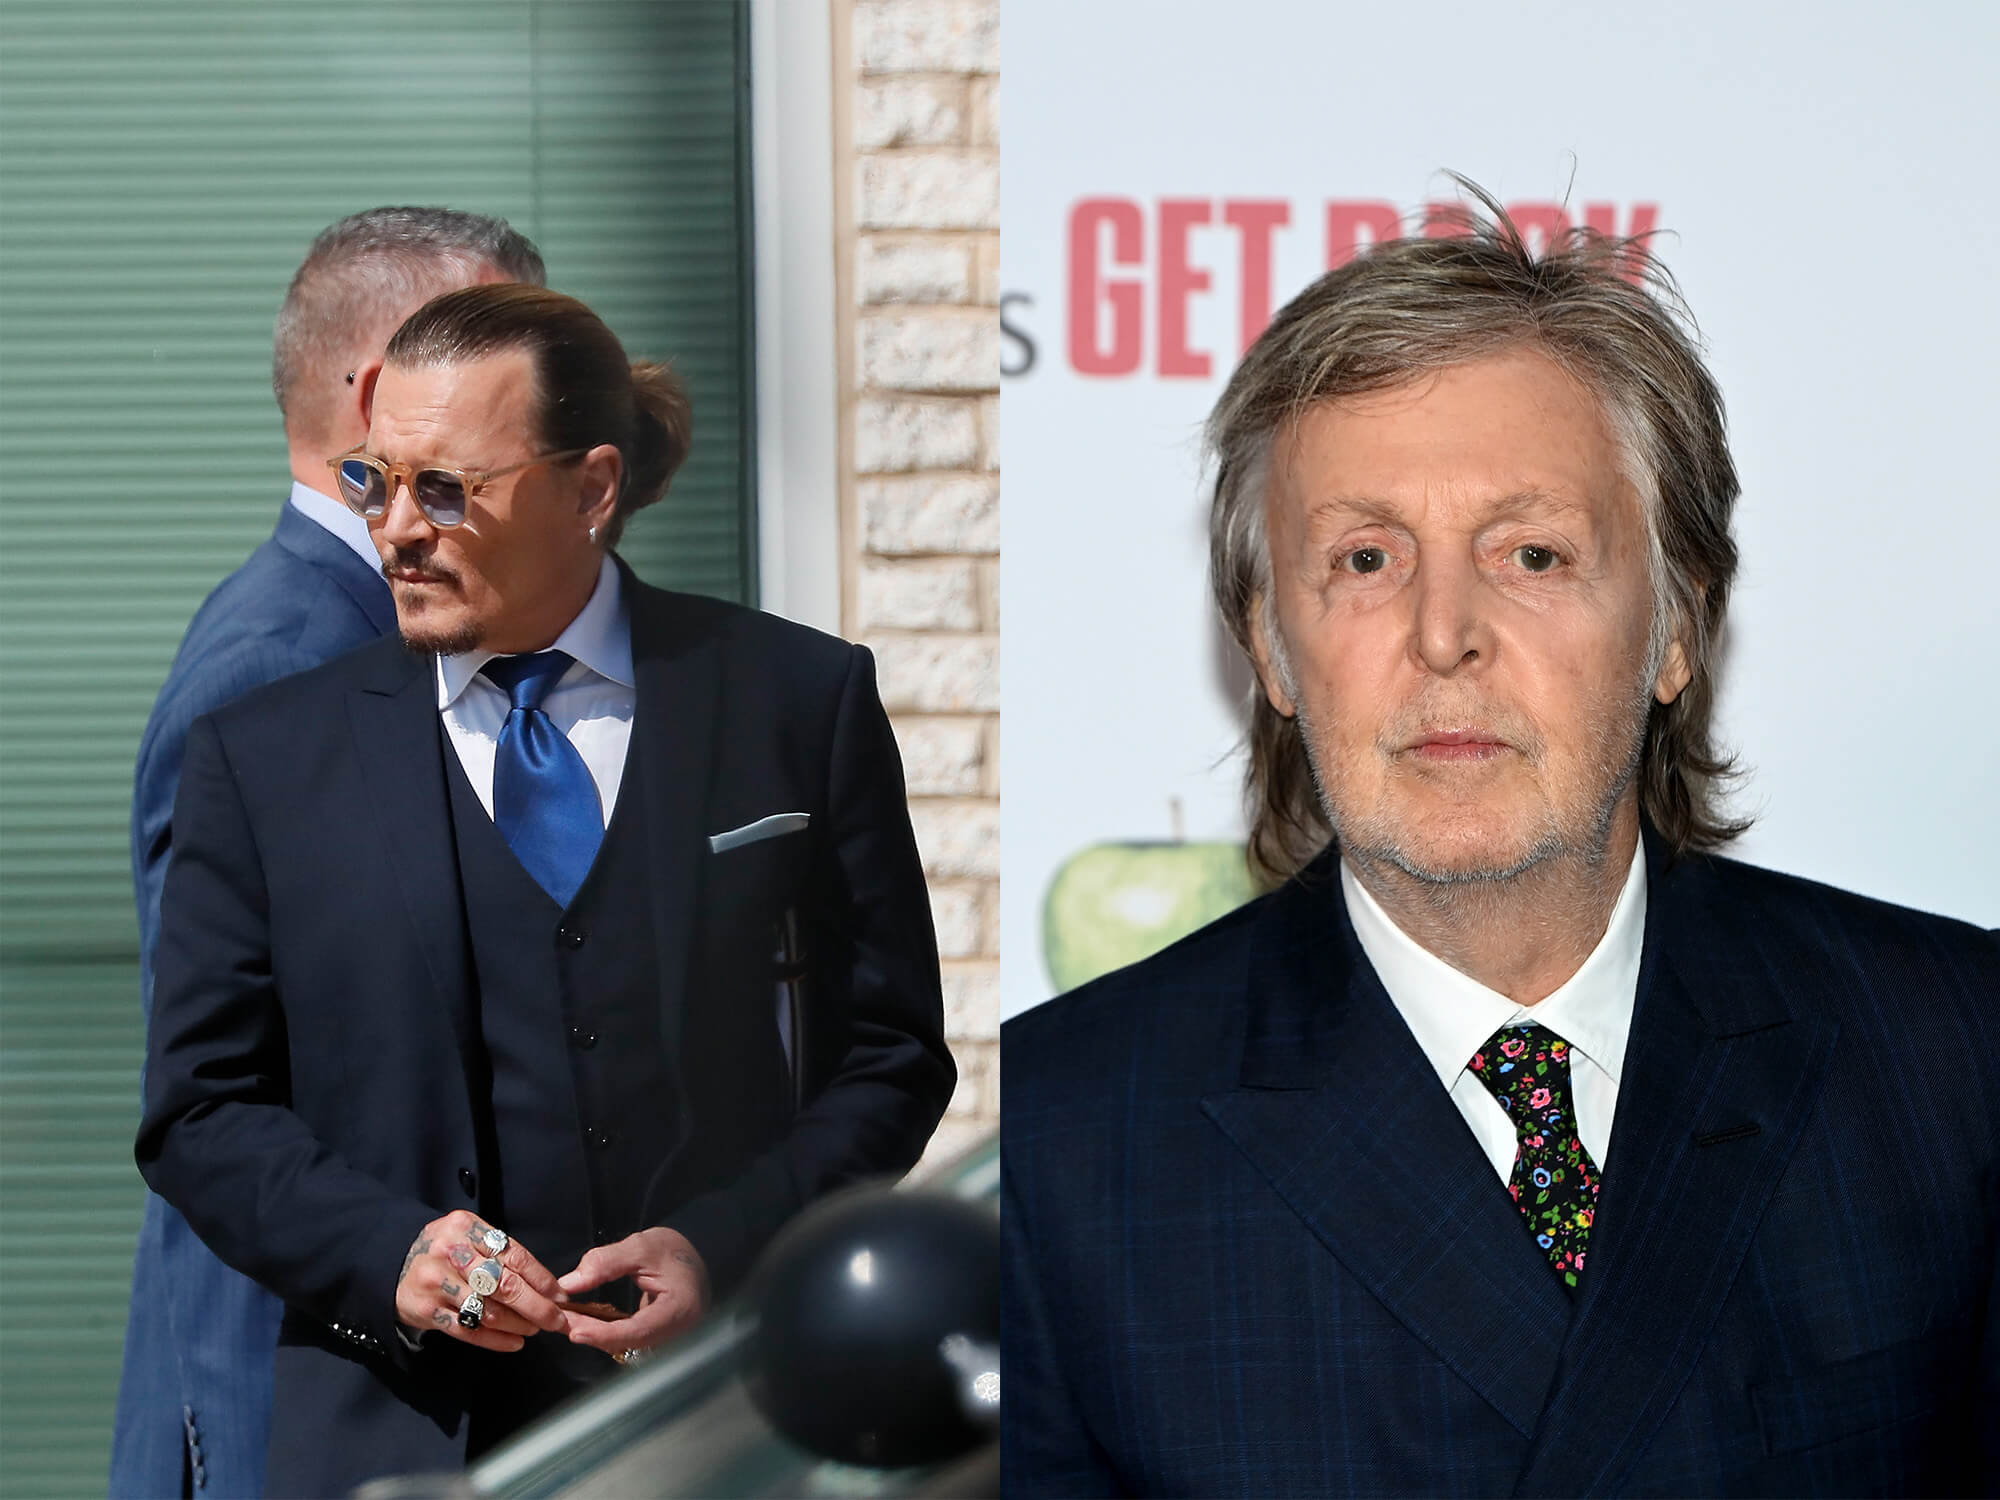 Johnny Depp and Paul McCartney